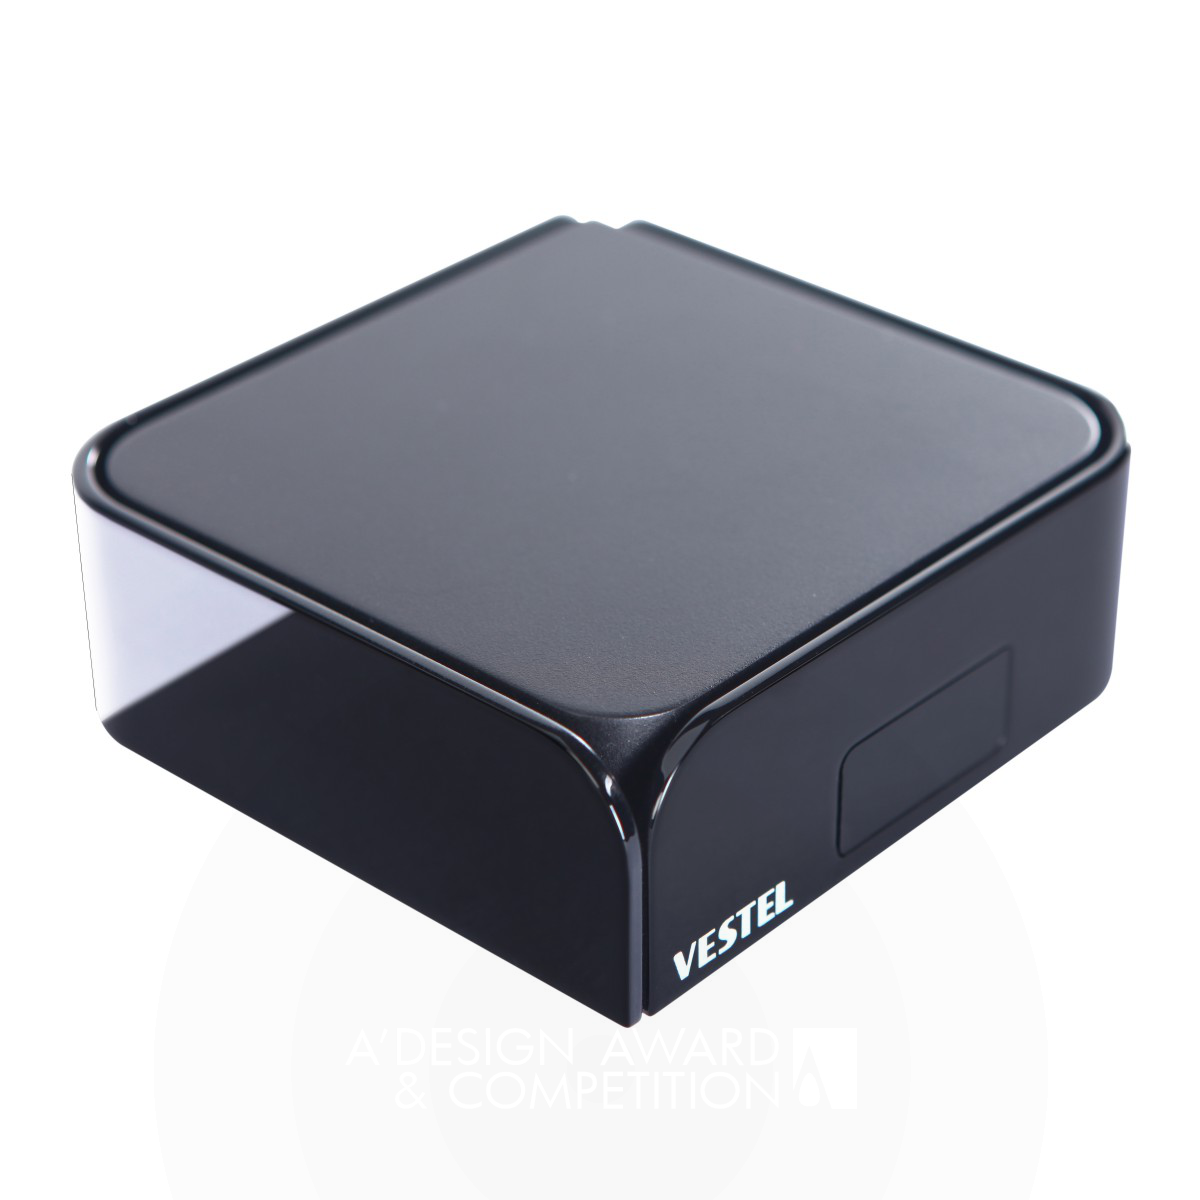 Avoi Set Top Box <b>Digital video broadcasting device